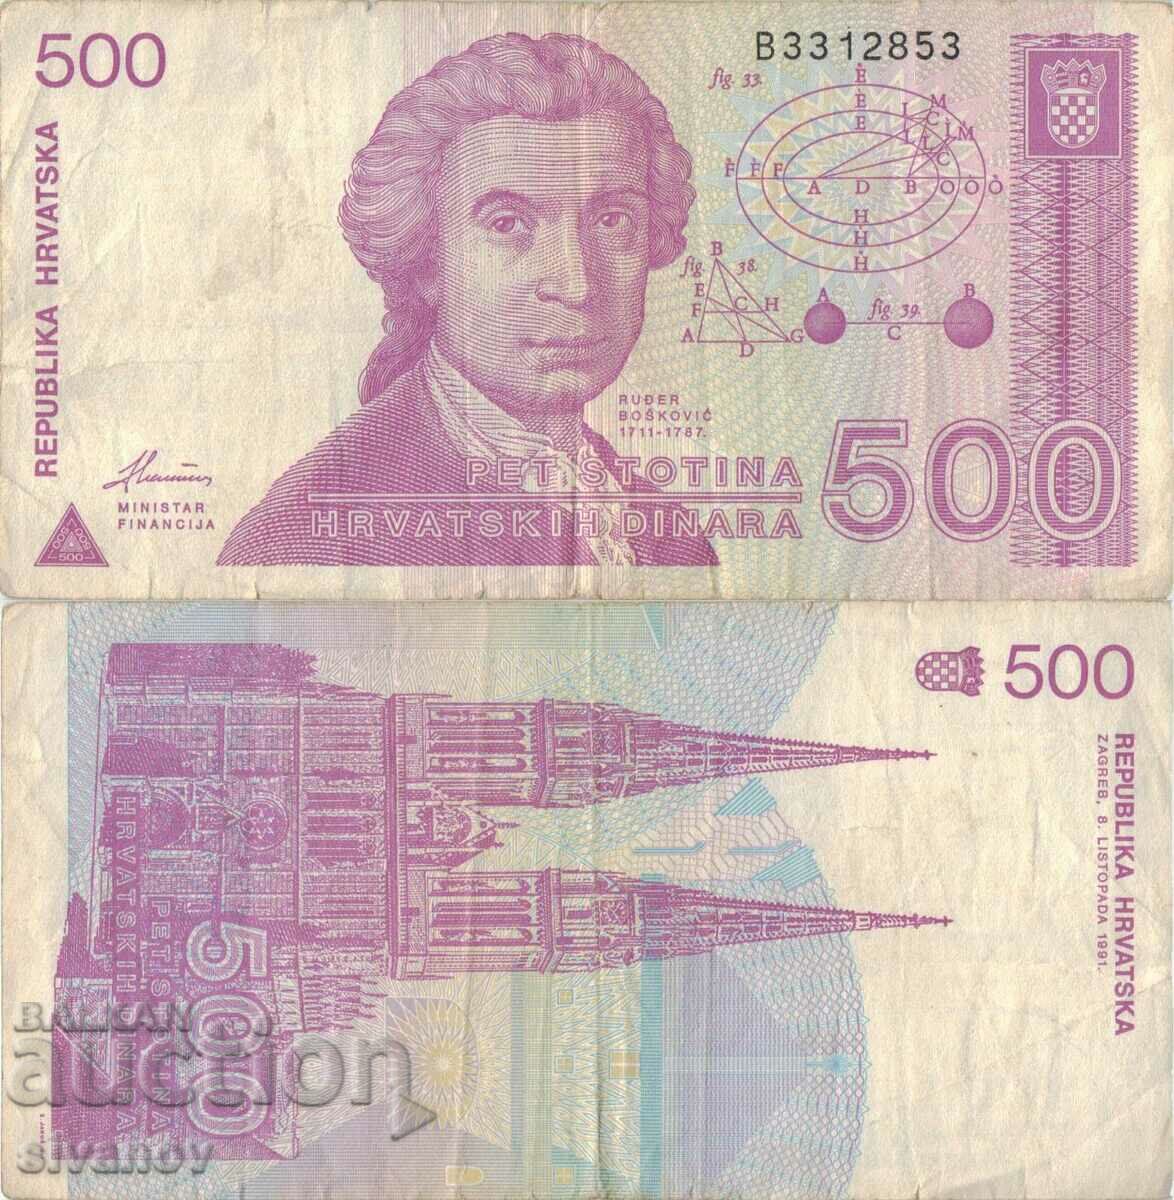 Croatia 500 dinars 1991 banknote #5328